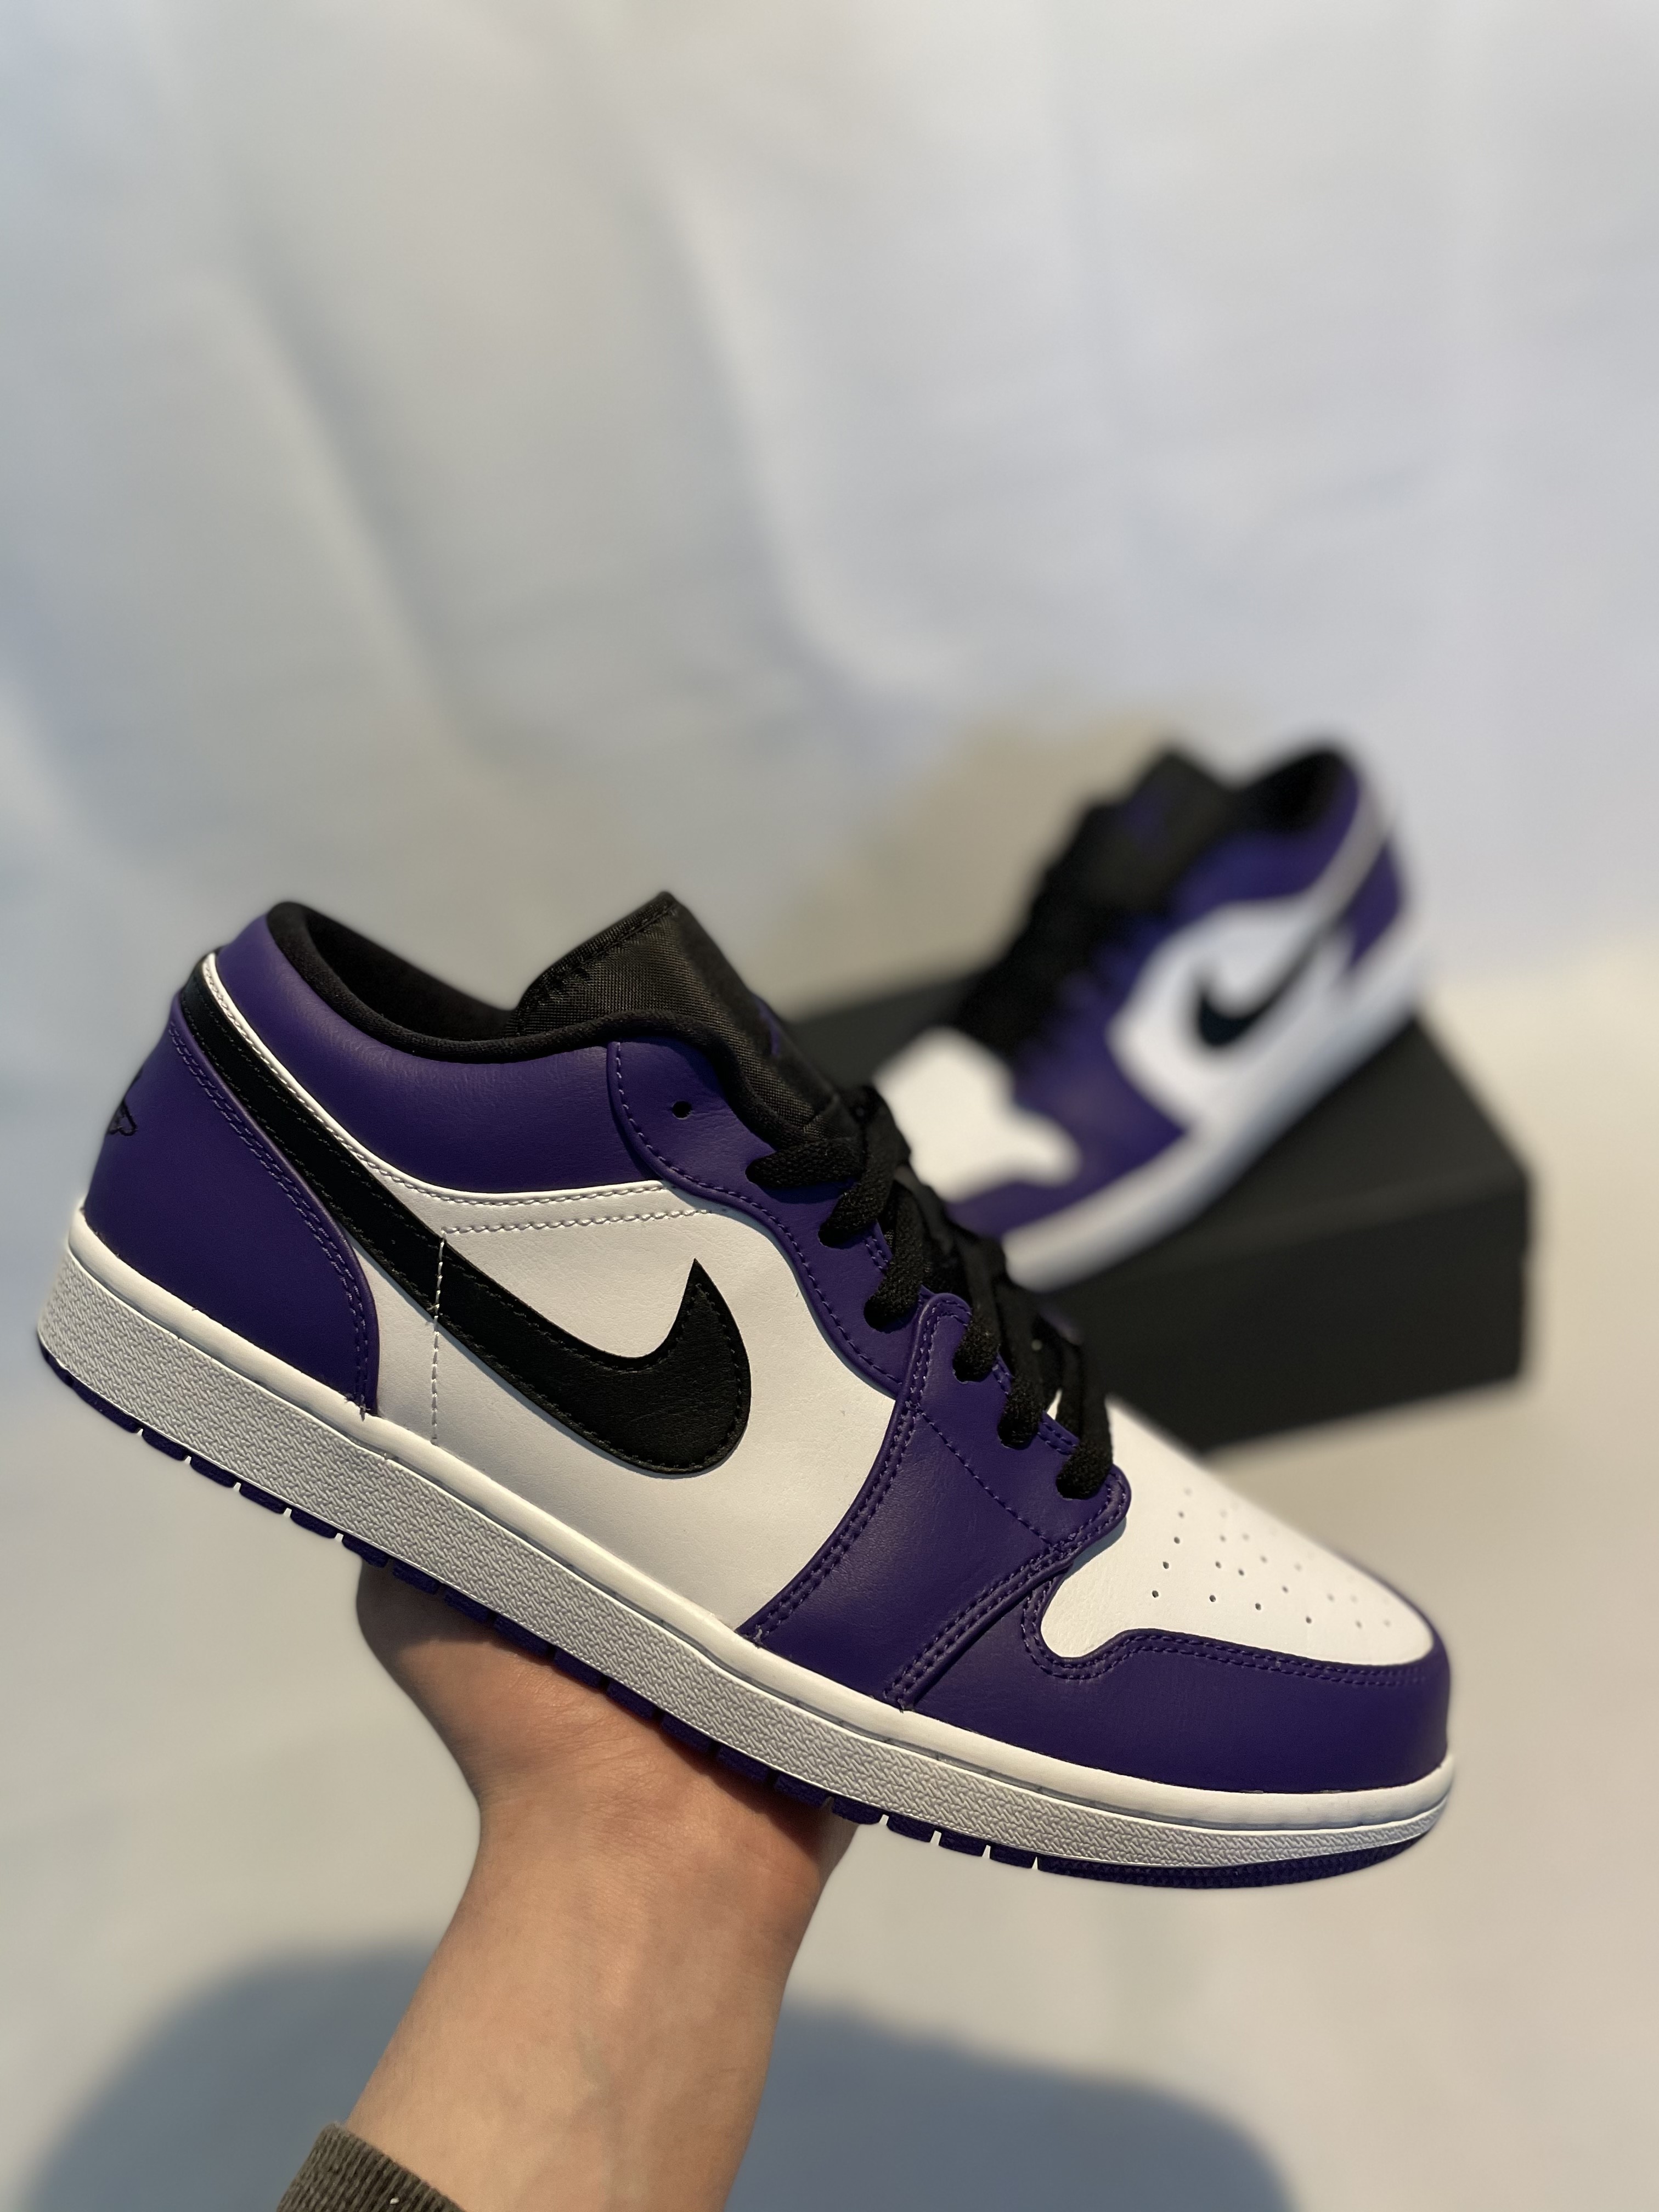 Jordan 1 low ‘court purple’ - 2